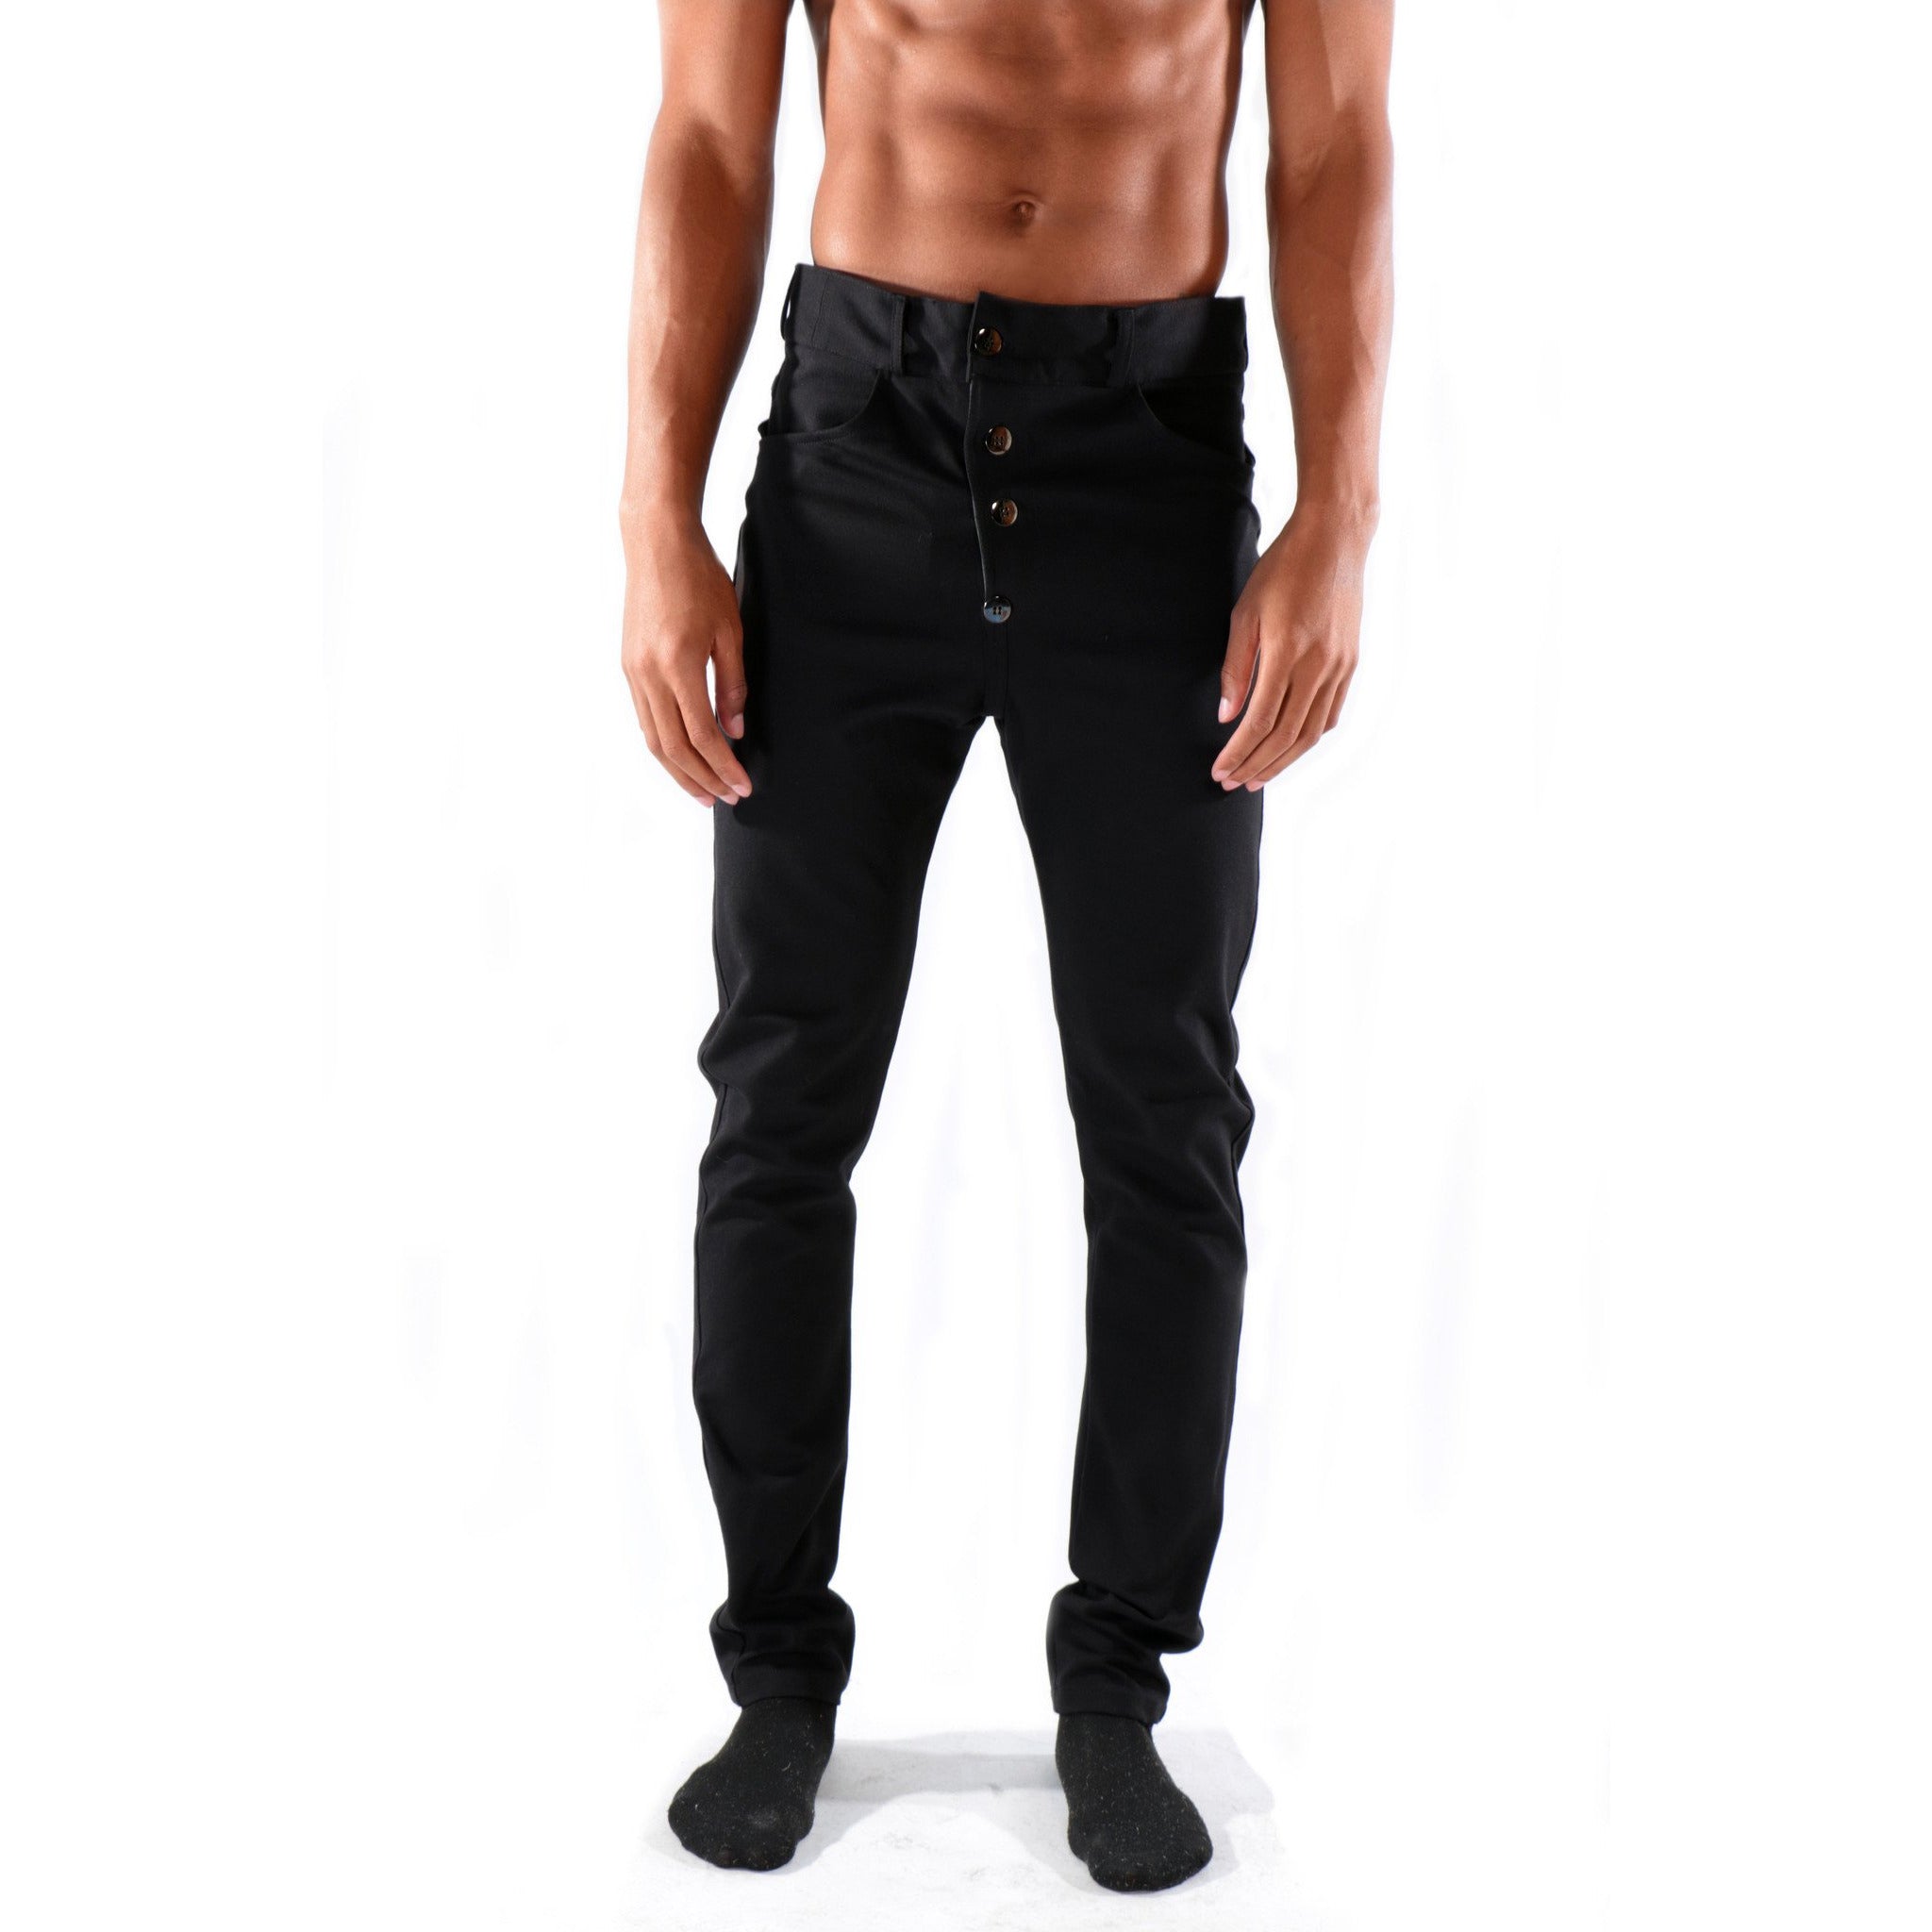 Black high waist fashion trouser with stretch